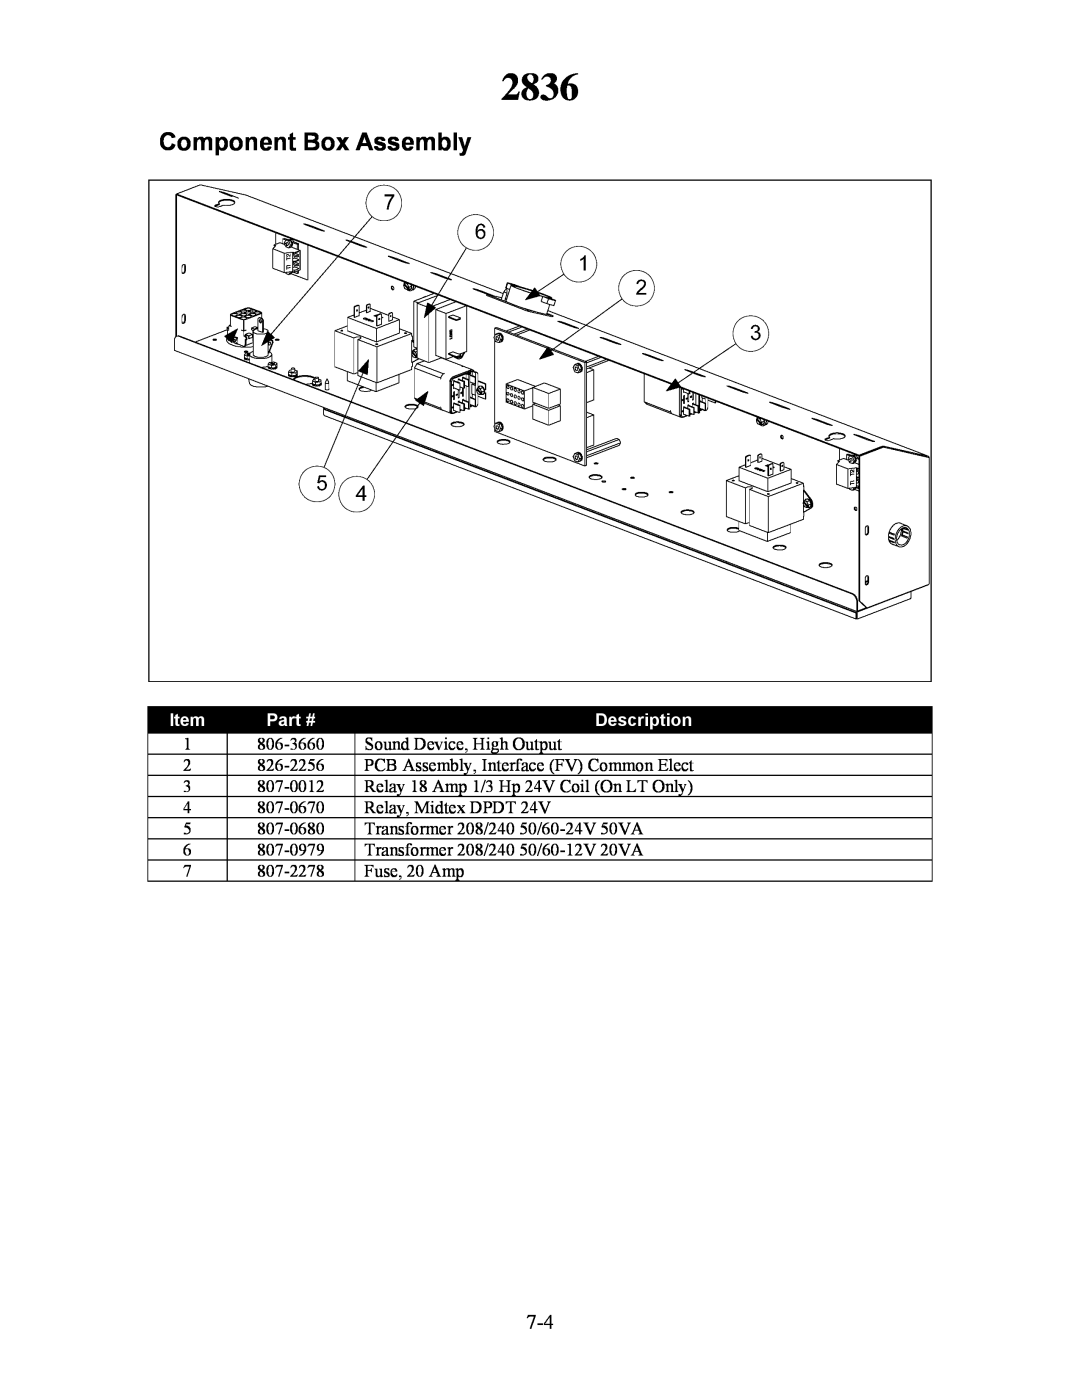 Frymaster H50 manual Component Box Assembly, 2836, Description 